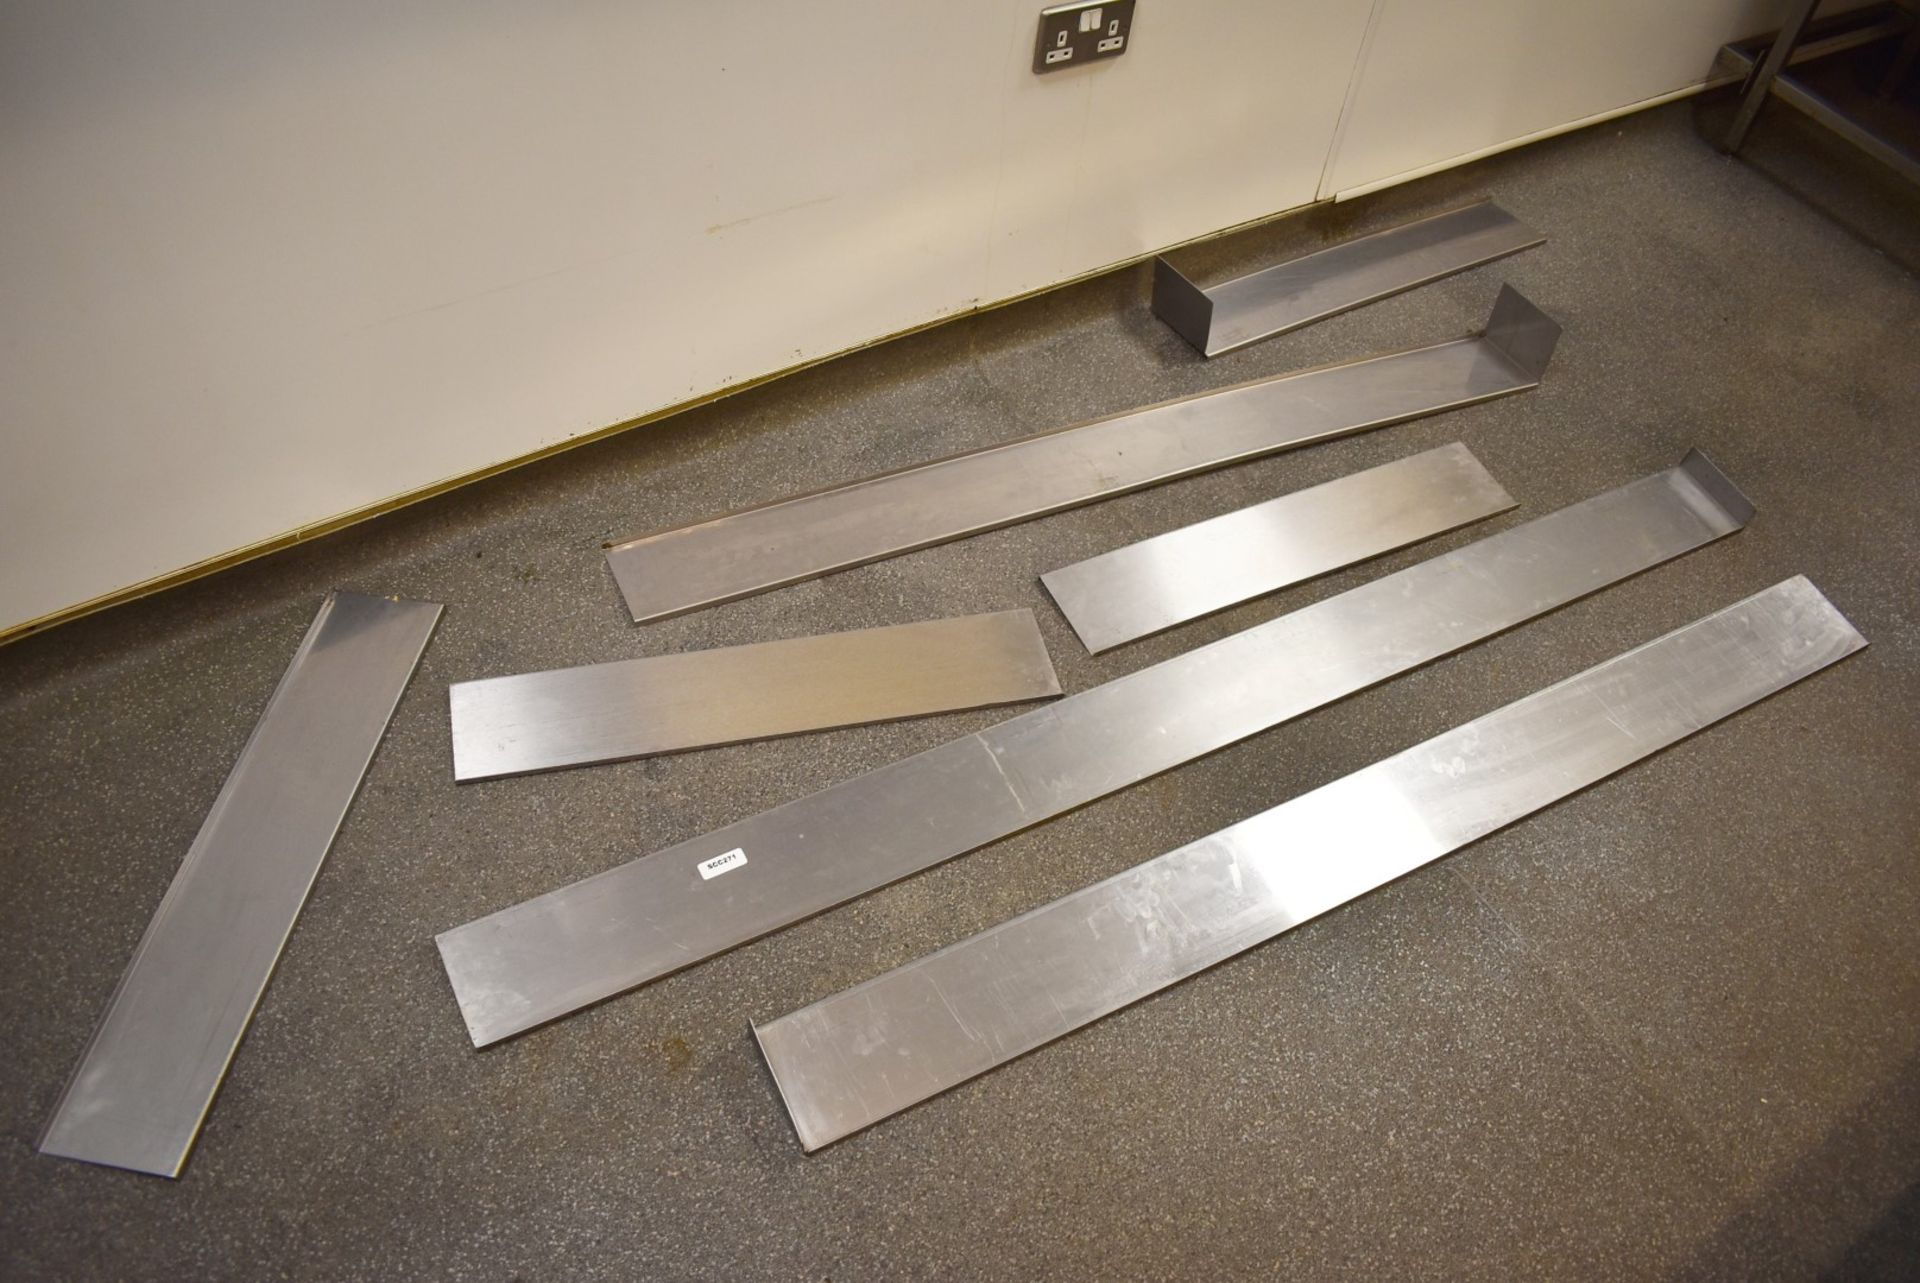 7 x Pieces of Stainless Steel Kickboard Plinths